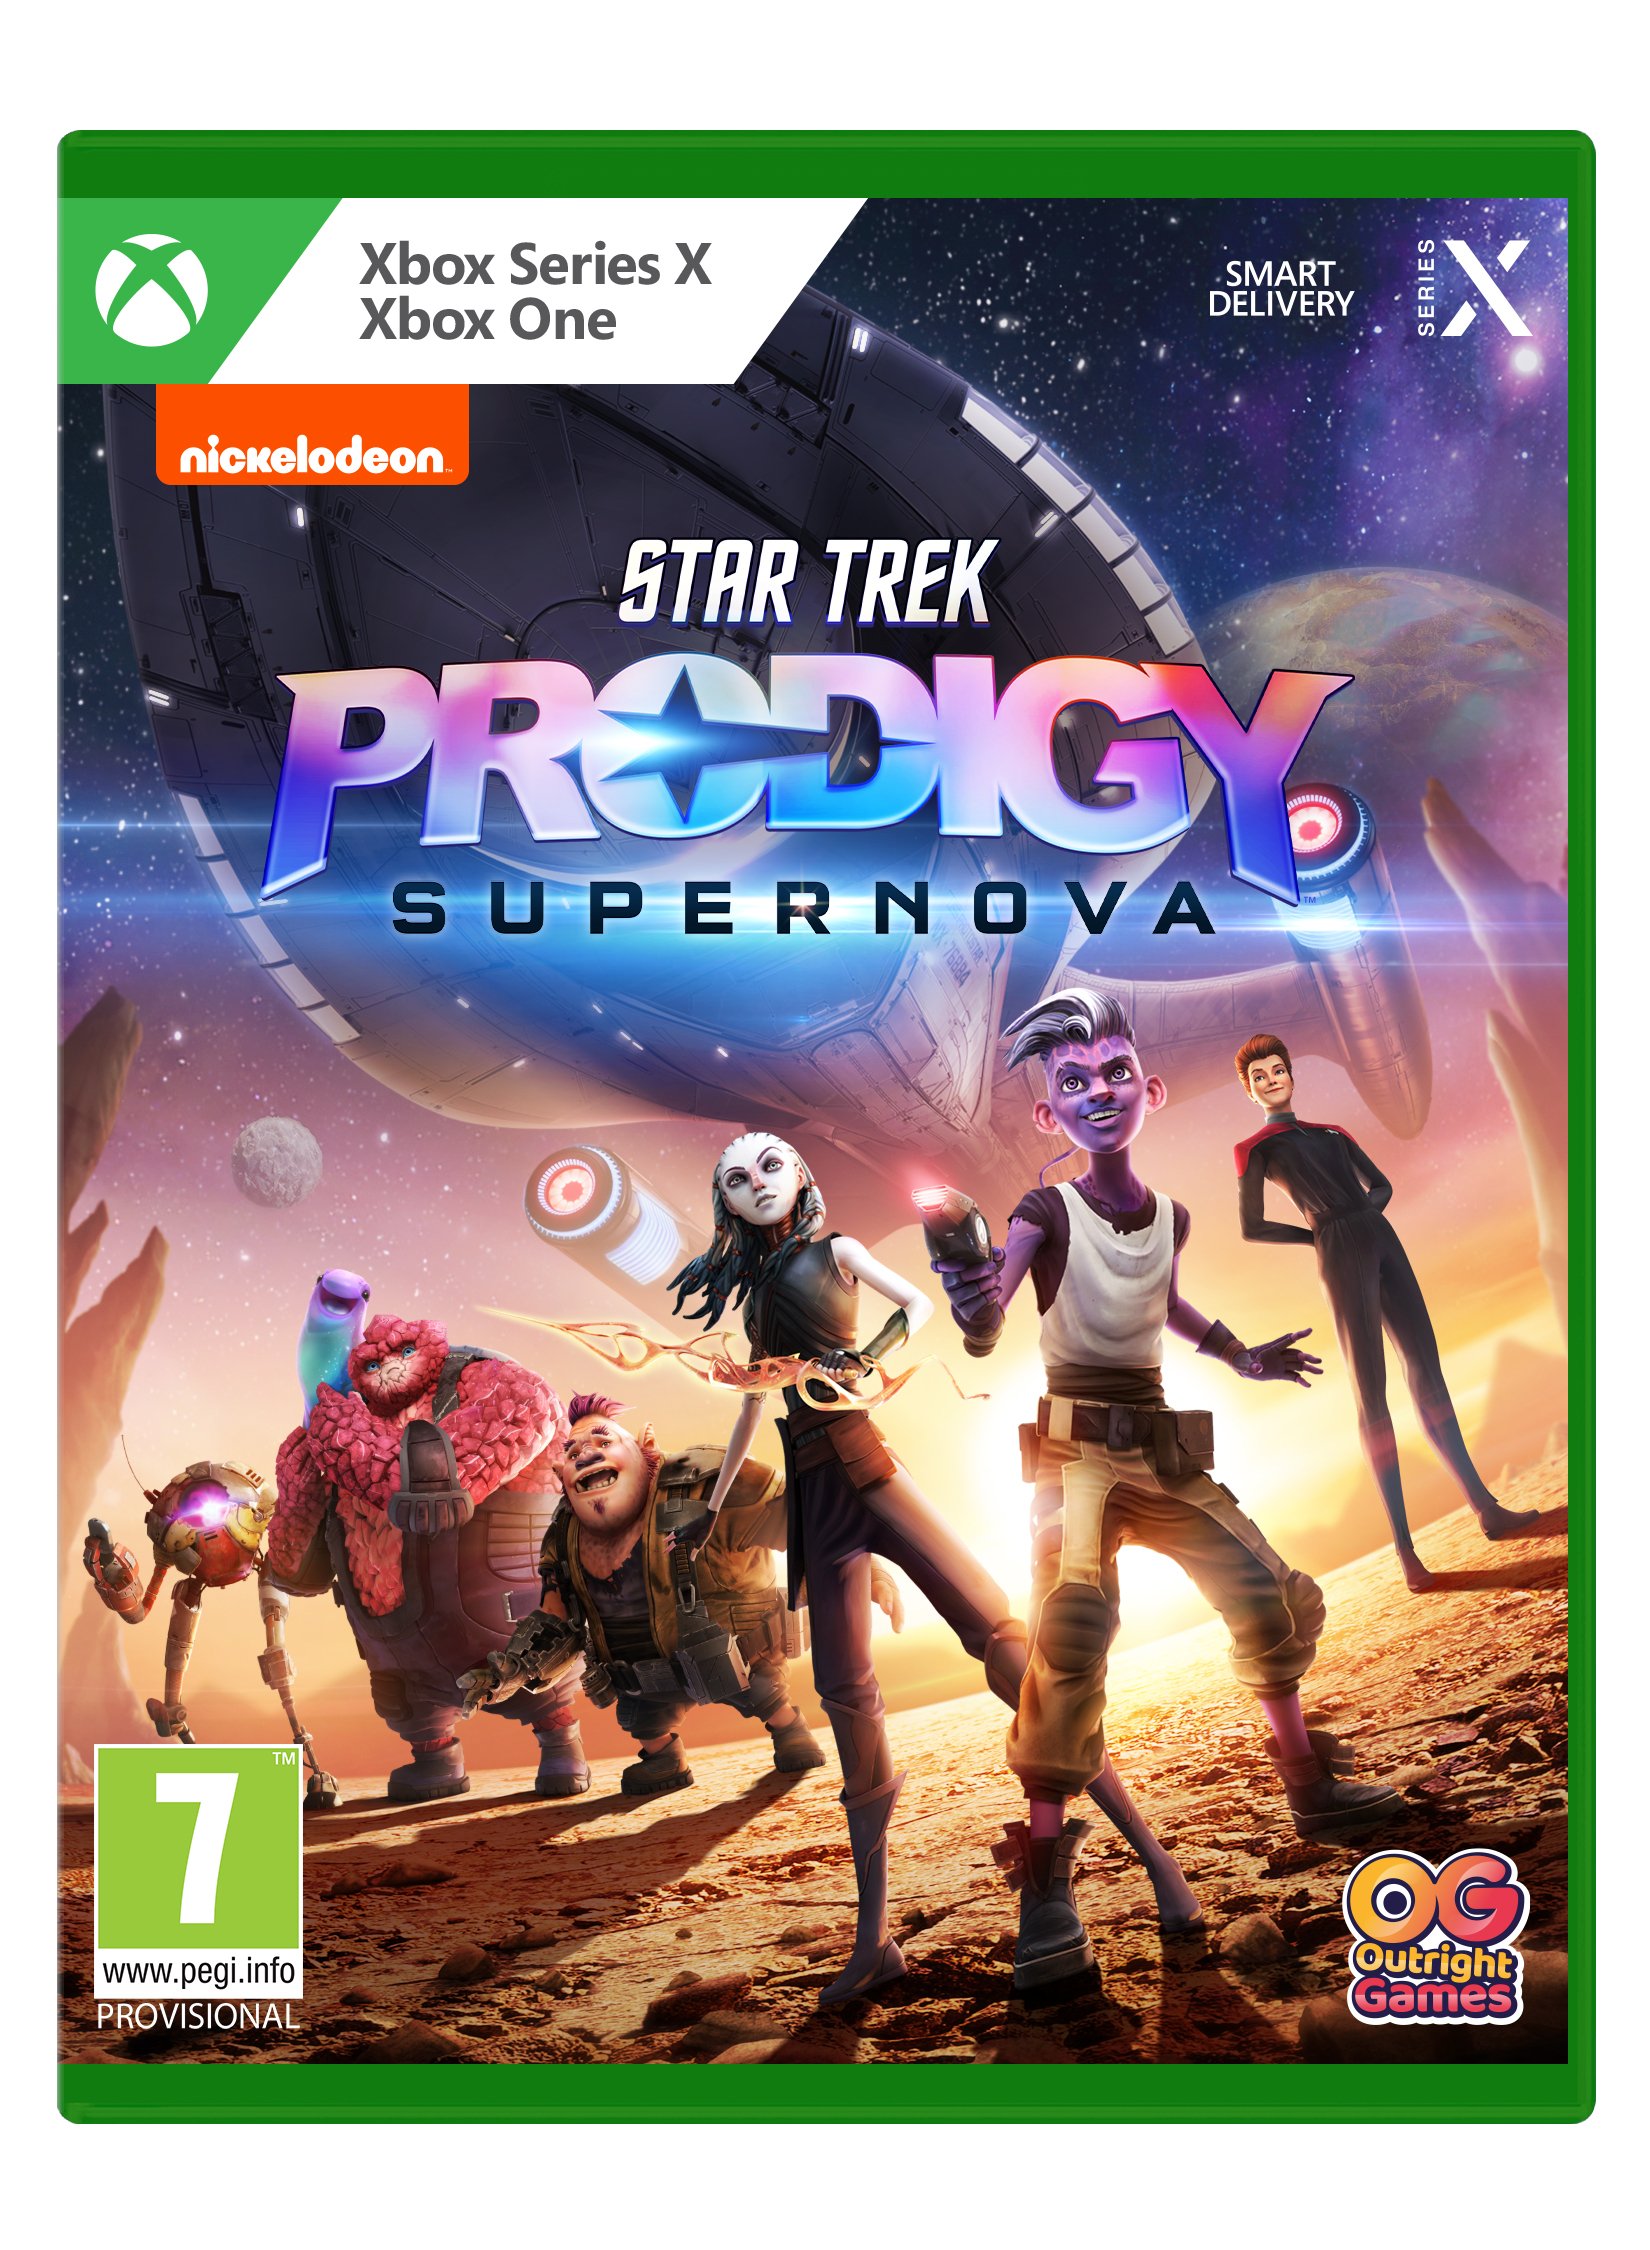 Star Trek Prodigy: Supernova von Outright Games